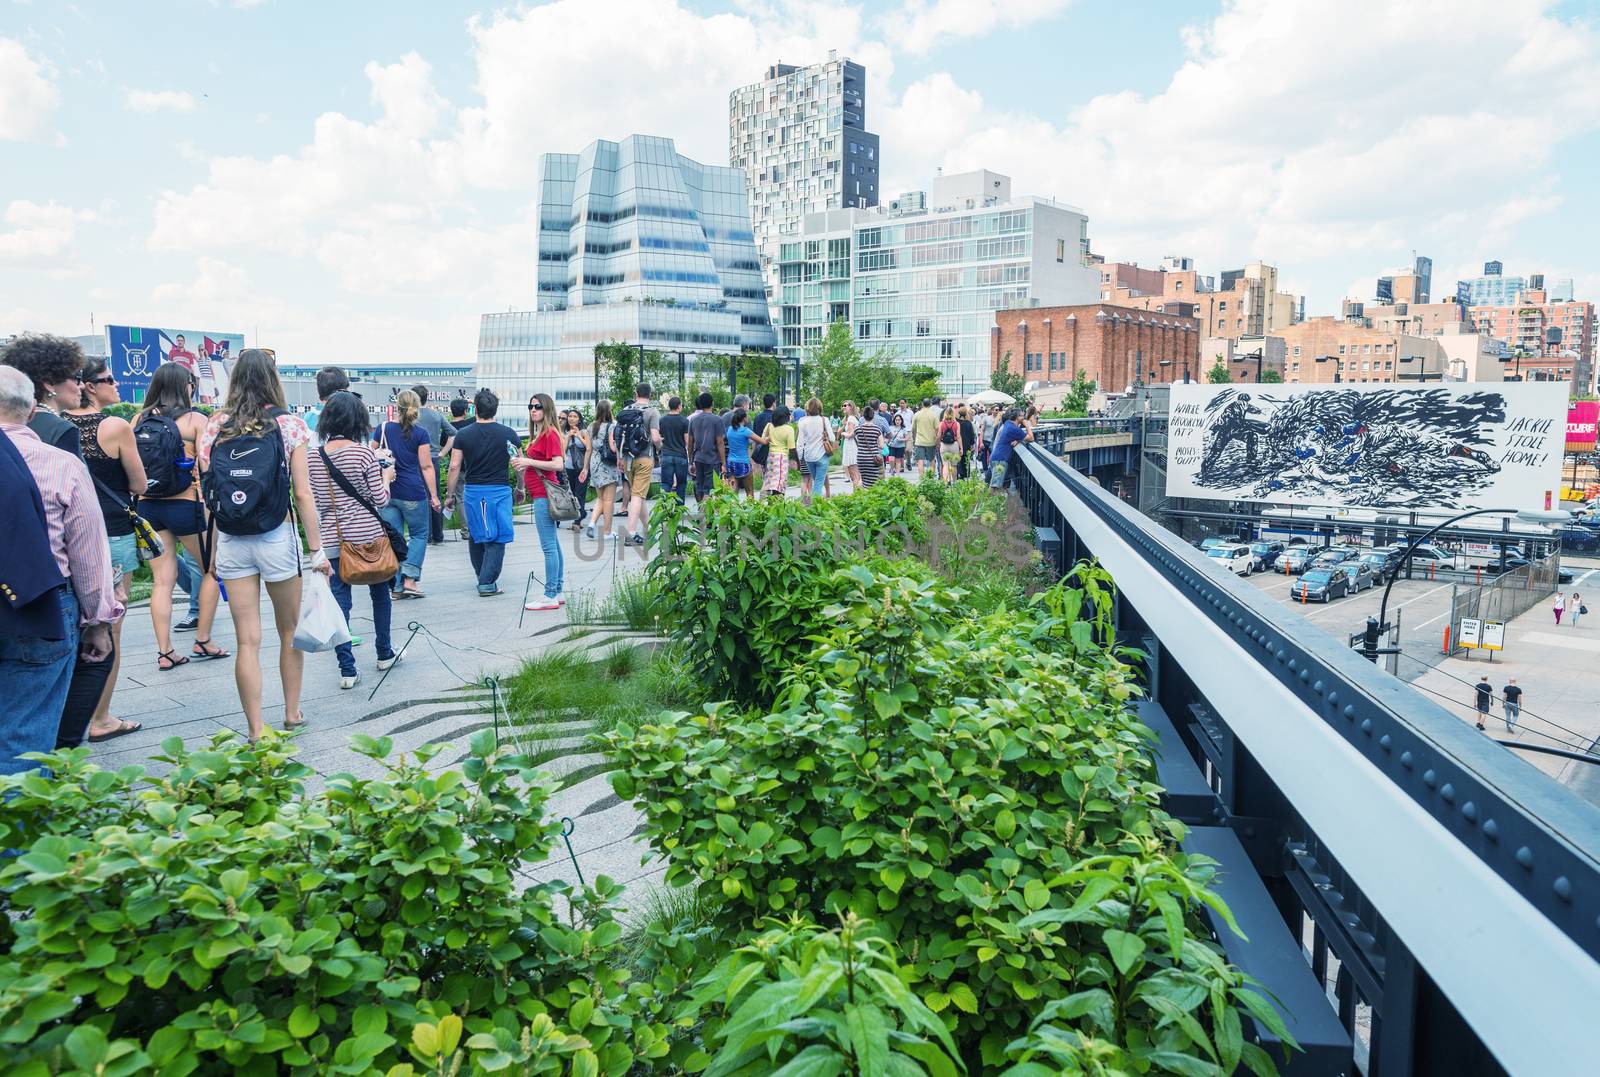 NEW YORK - CIRCA MAY 2013: The High Line Park, New York, circa M by jovannig